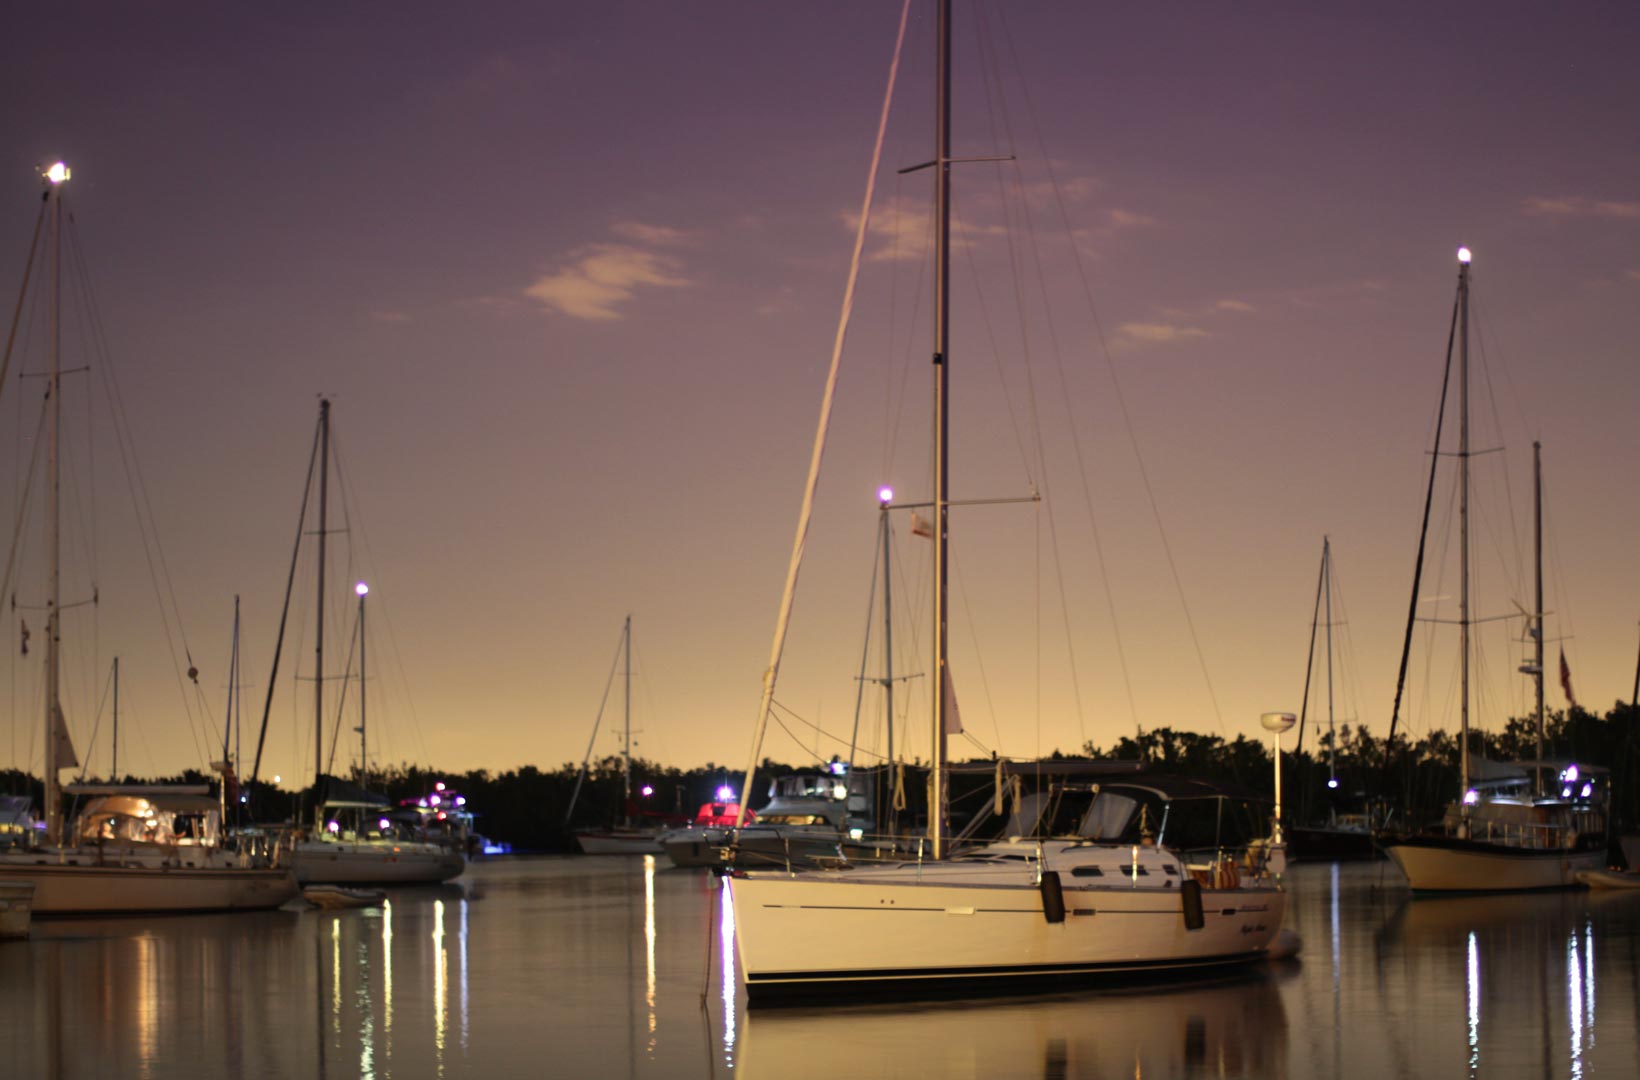 image of boats anchored in No Name Harbor at night